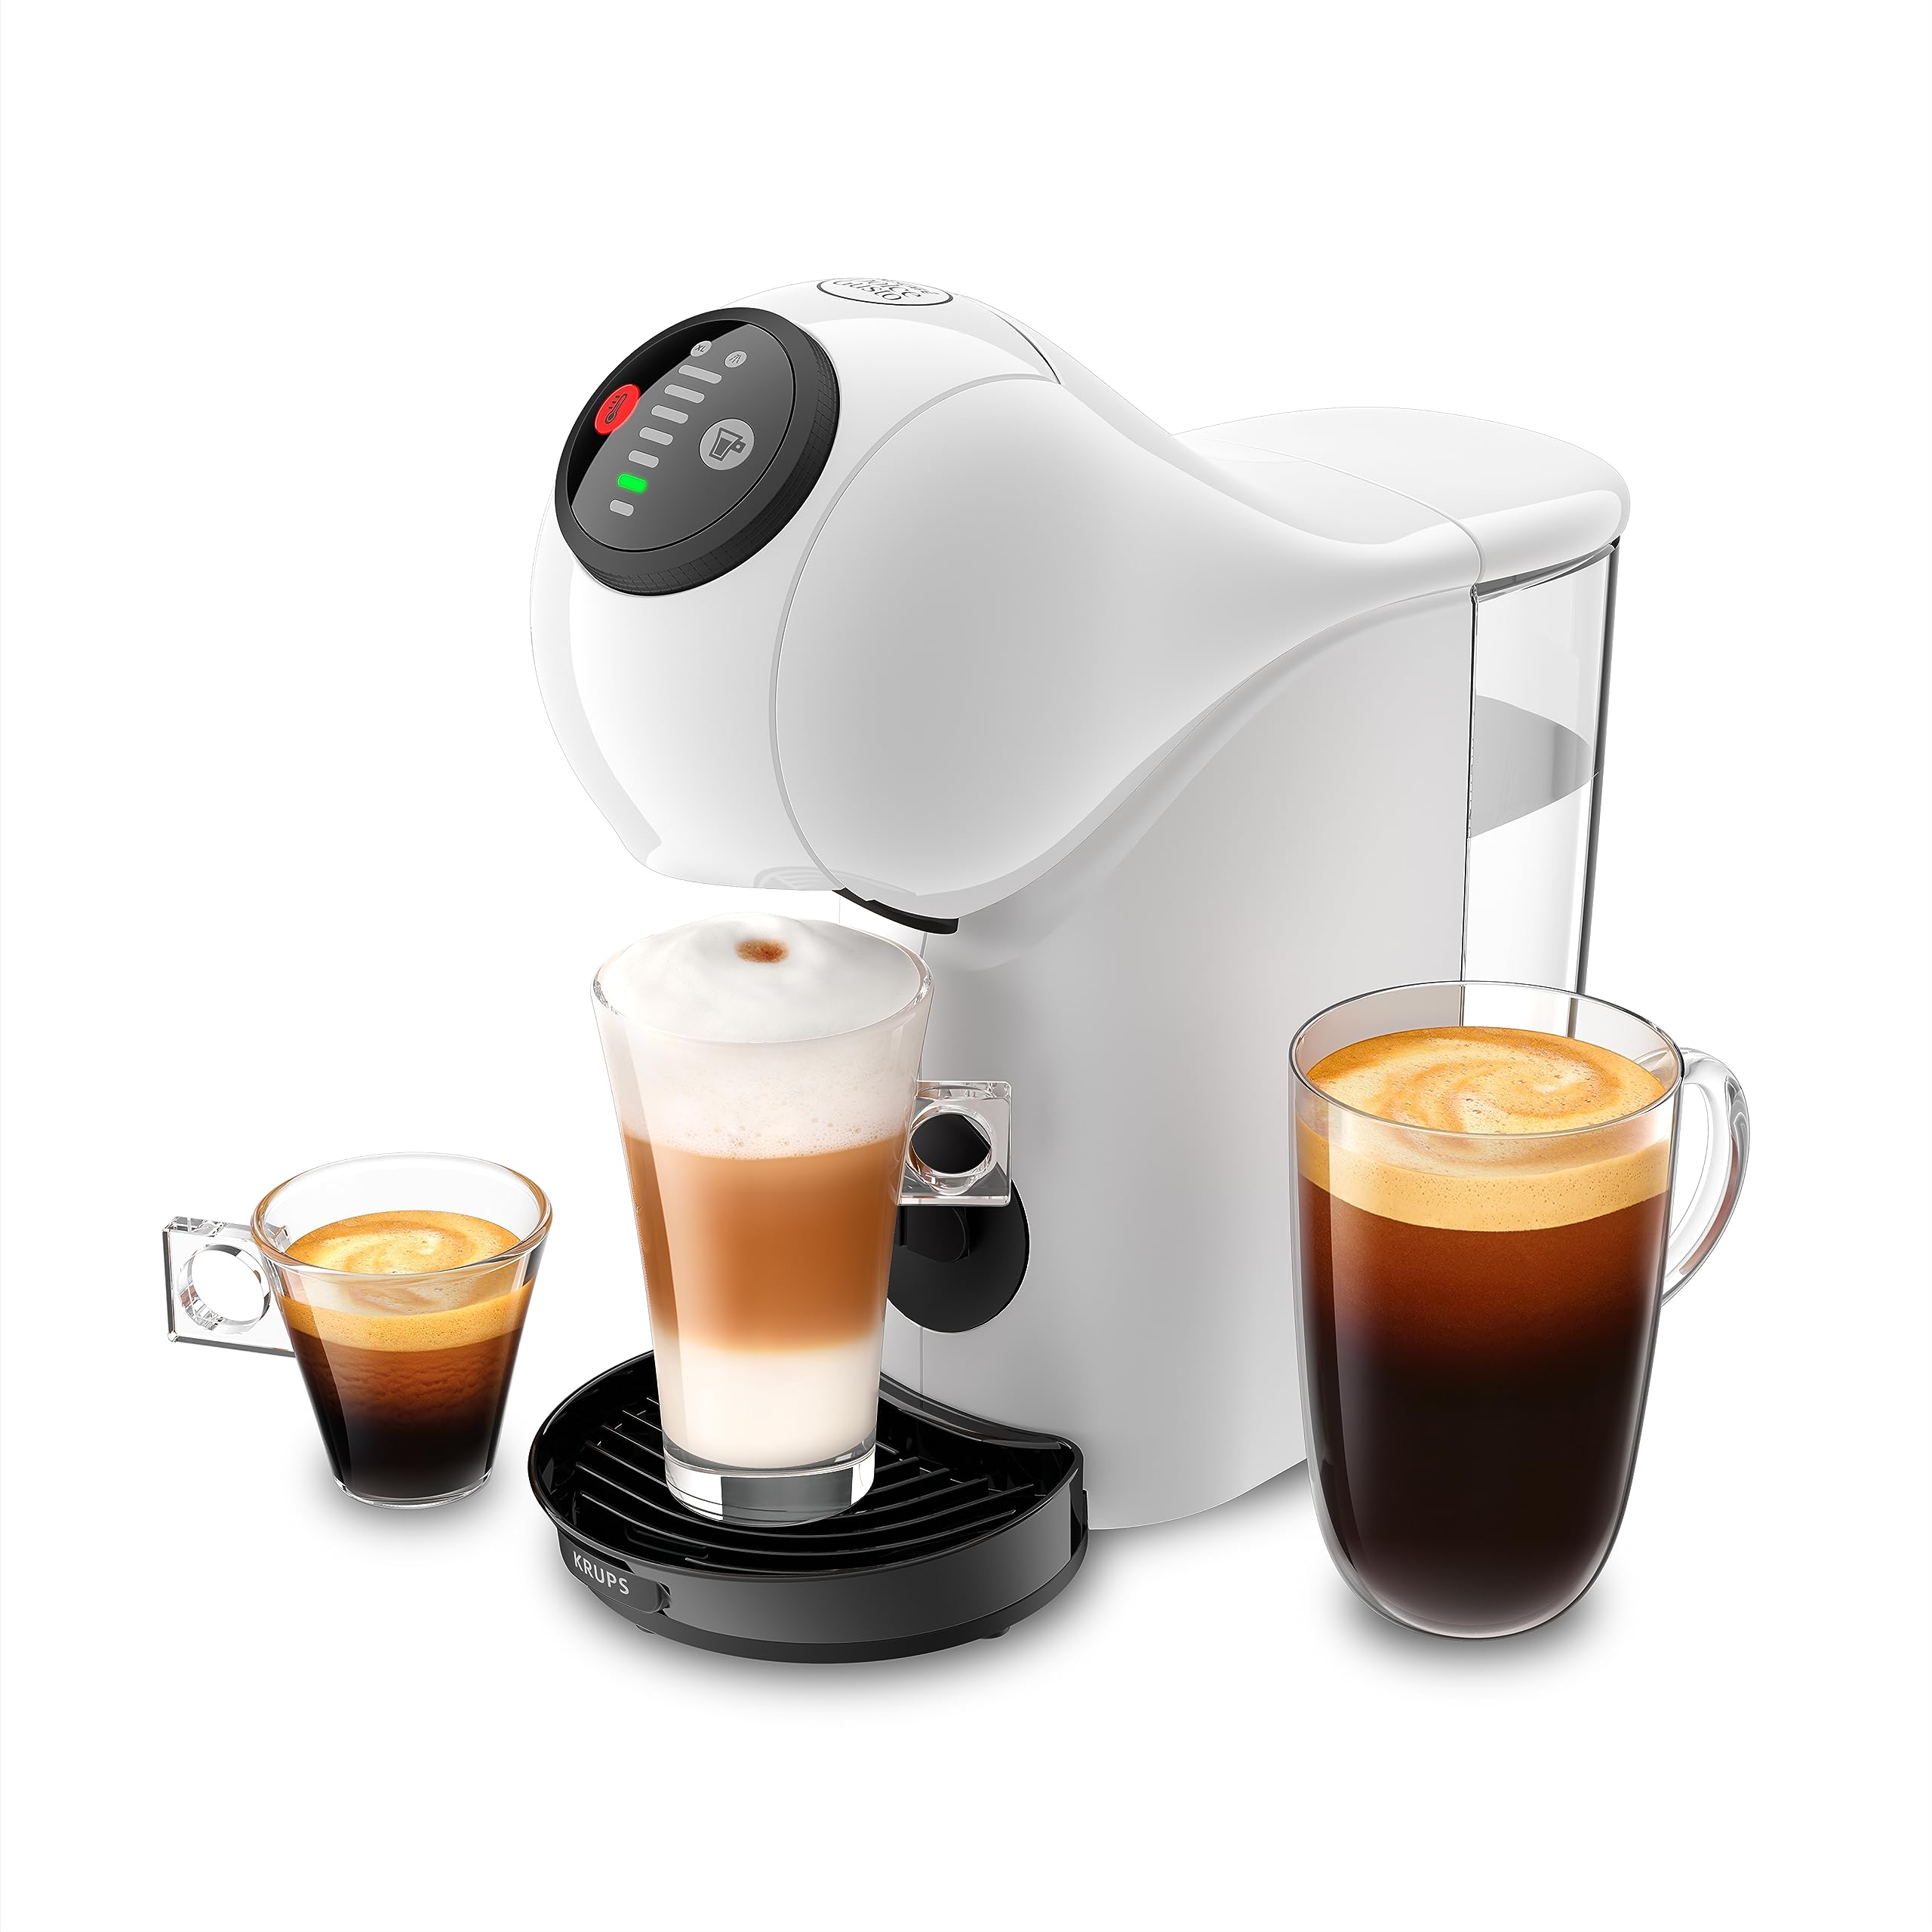 NESCAFÉ Dolce Gusto Krups KP2431 Genio S Kaffeekapselmaschine | 15 Bar | ultra-kompakt | Hochdruck | über 30 Kaffeekreationen | wählbare Getränkegröße | Auto-Abschaltung | Weiß